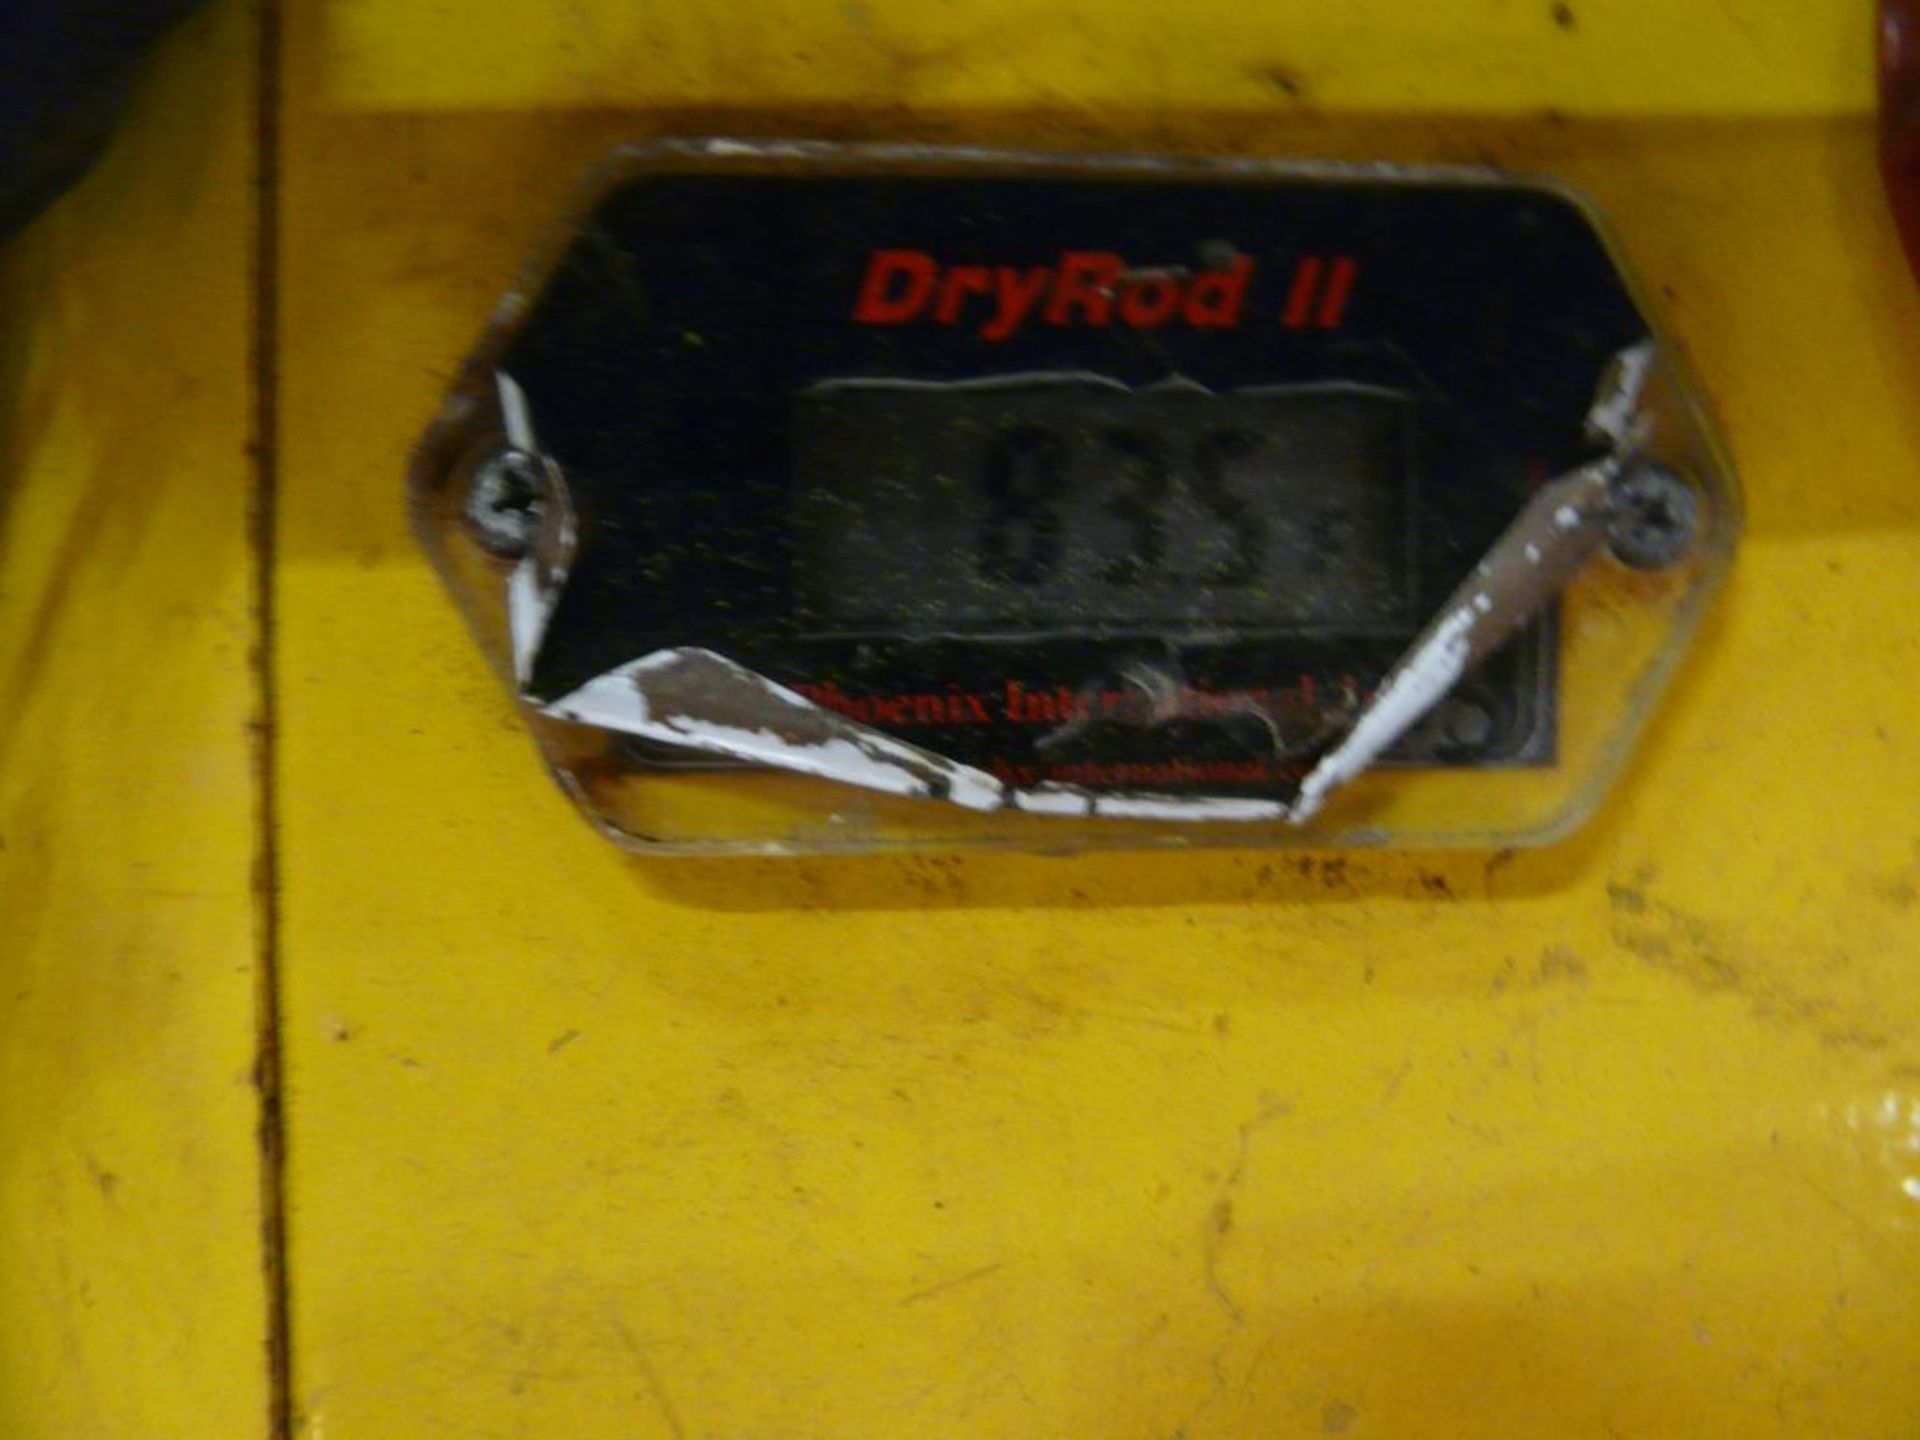 Lot of (2) Phoenix DryRod II Electrode Stabilizing Ovens - Image 3 of 5